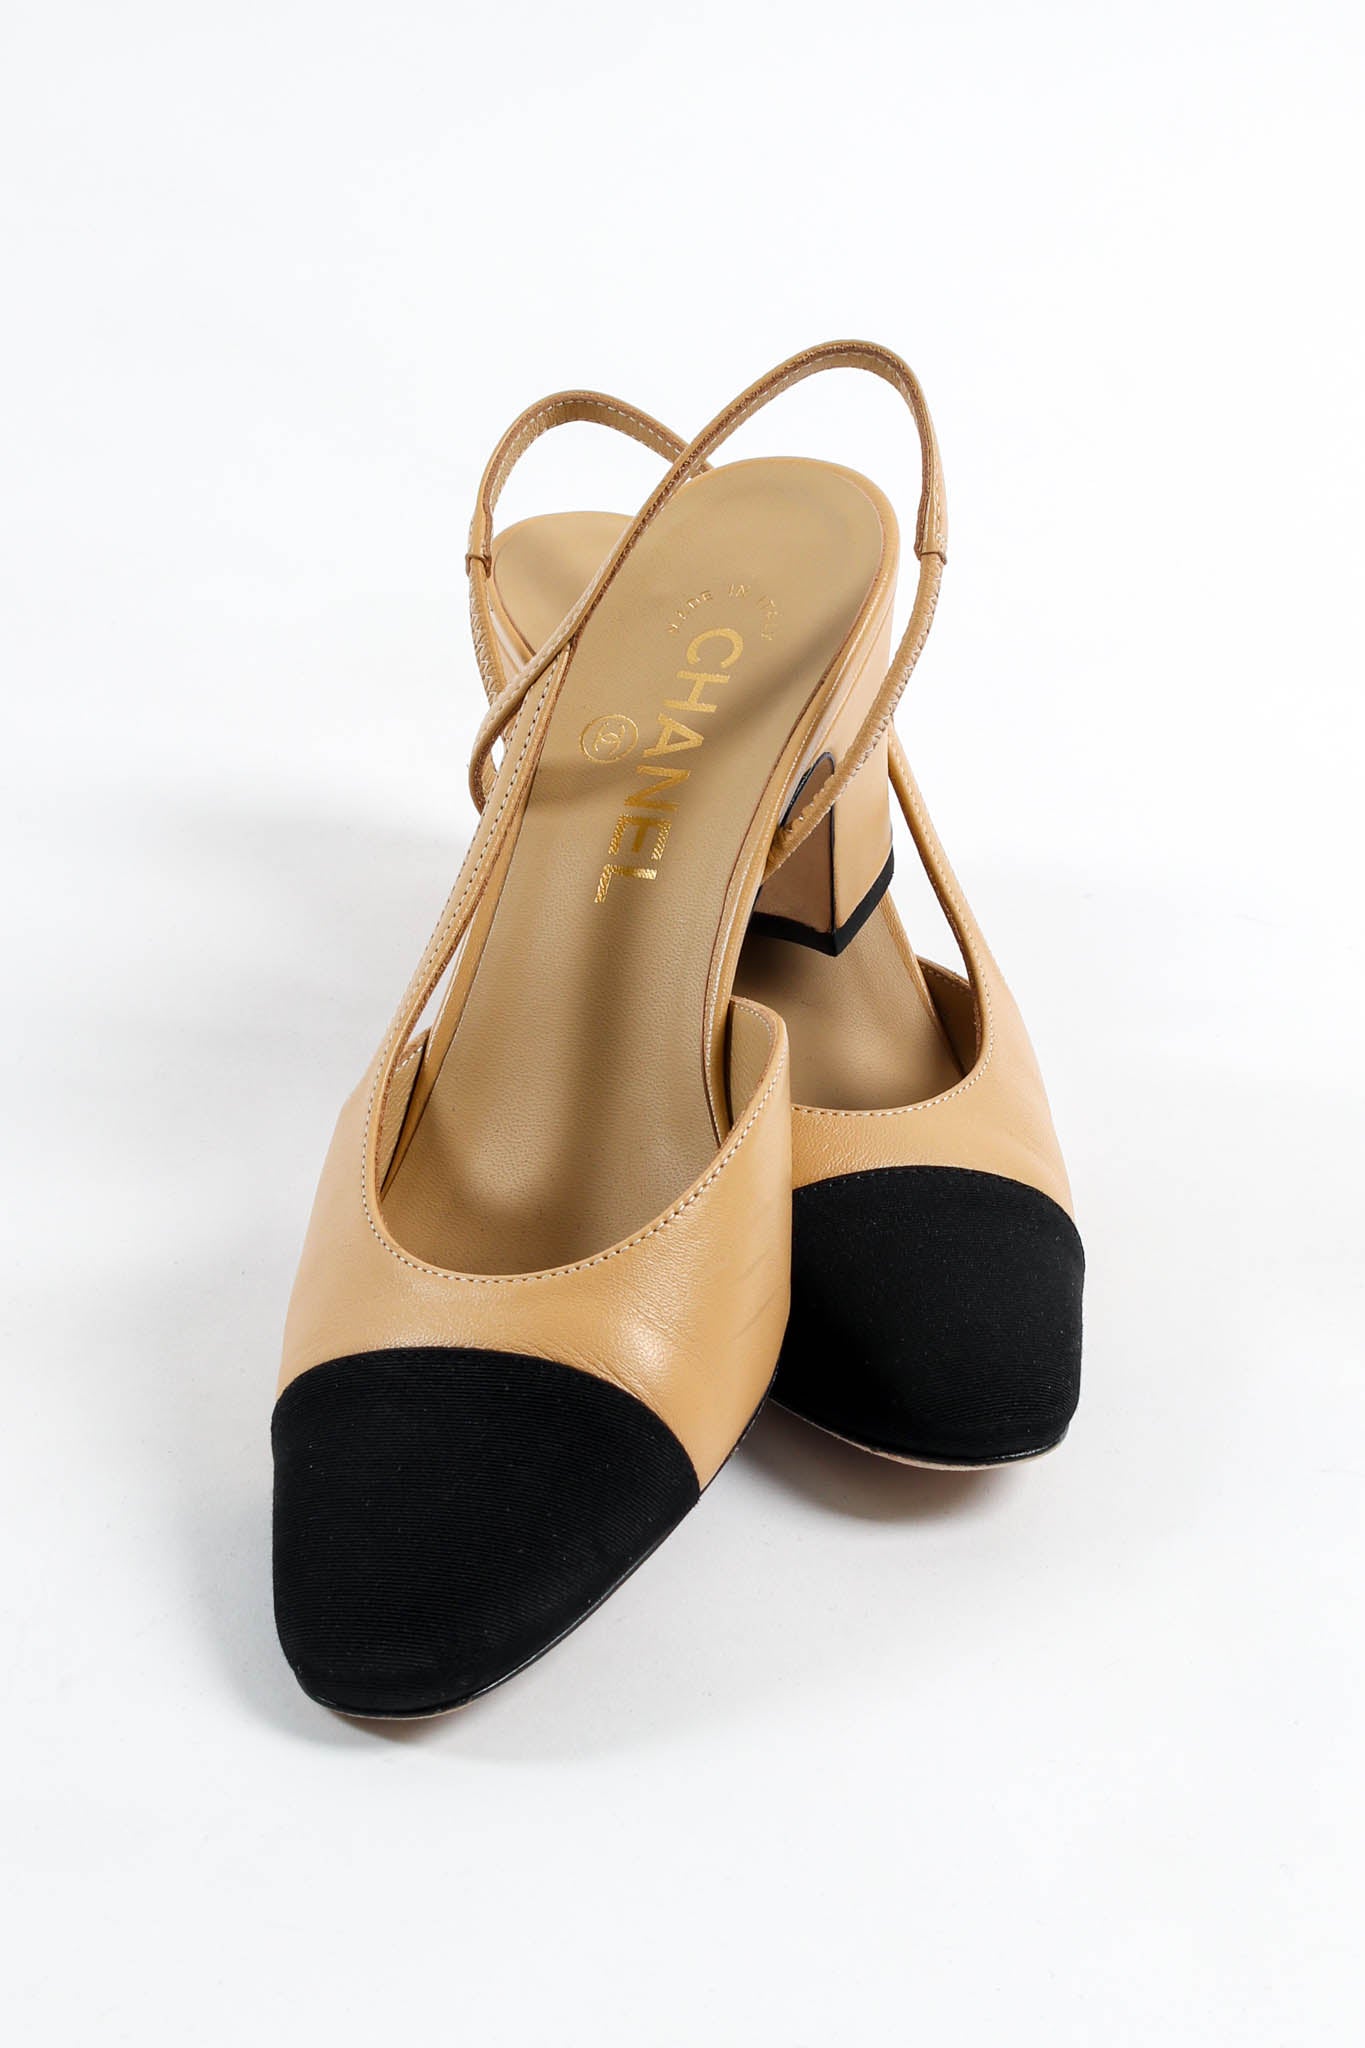 Chanel Slingbacks: Comparison Flats vs Heels 